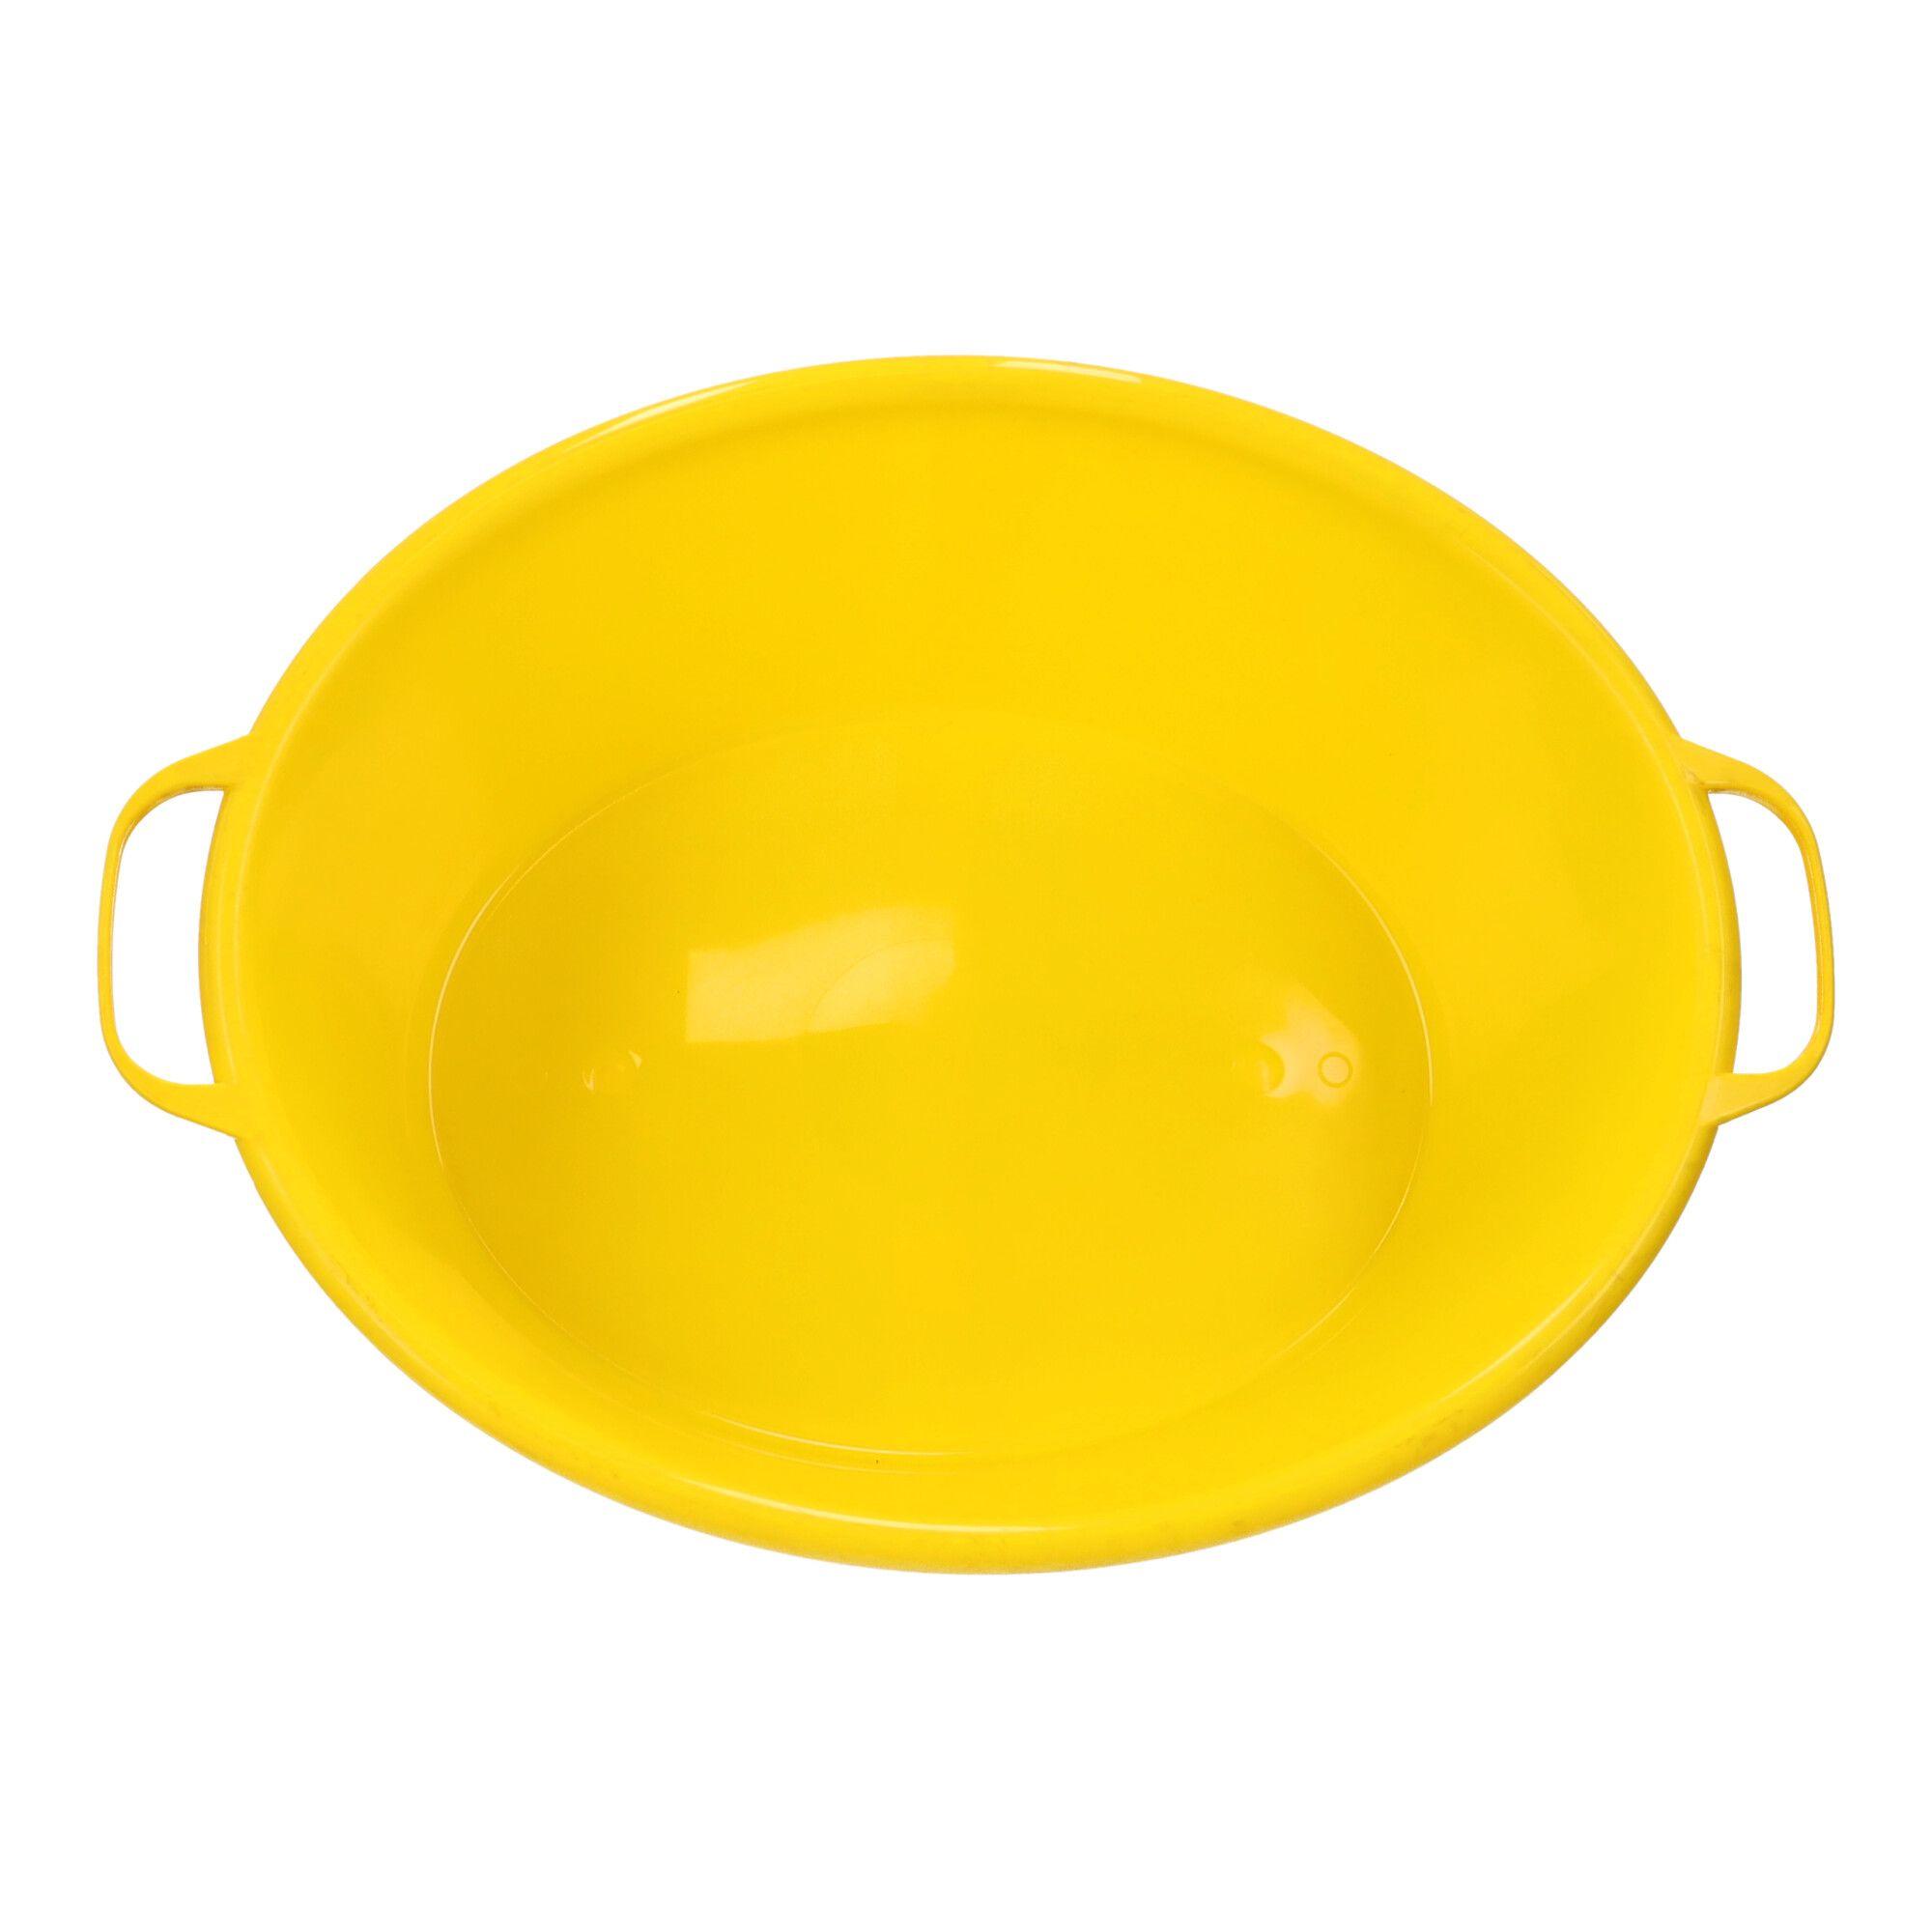 Oval bowl 30L, POLISH PRODUCT